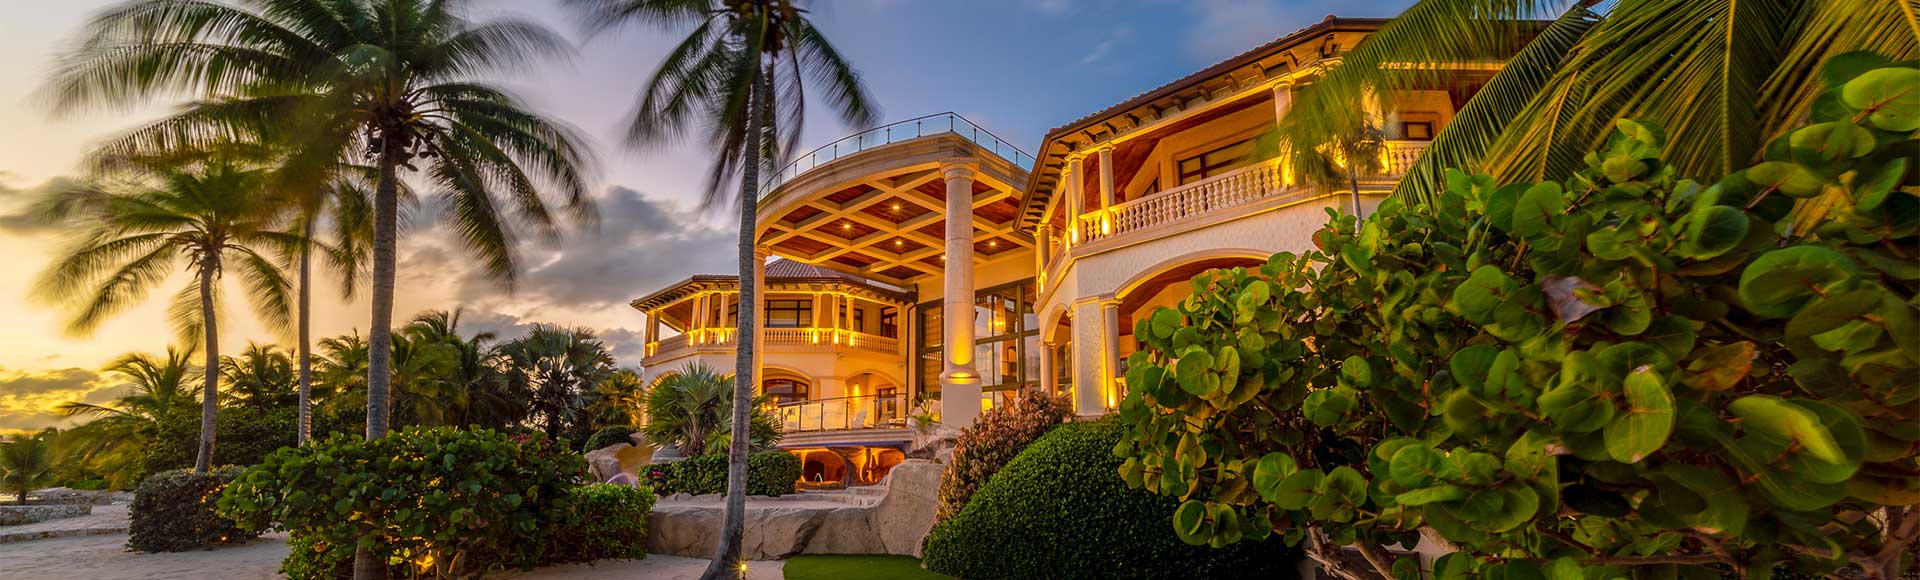 Castillo Caribe, luxury beachfront home in the Cayman Islands